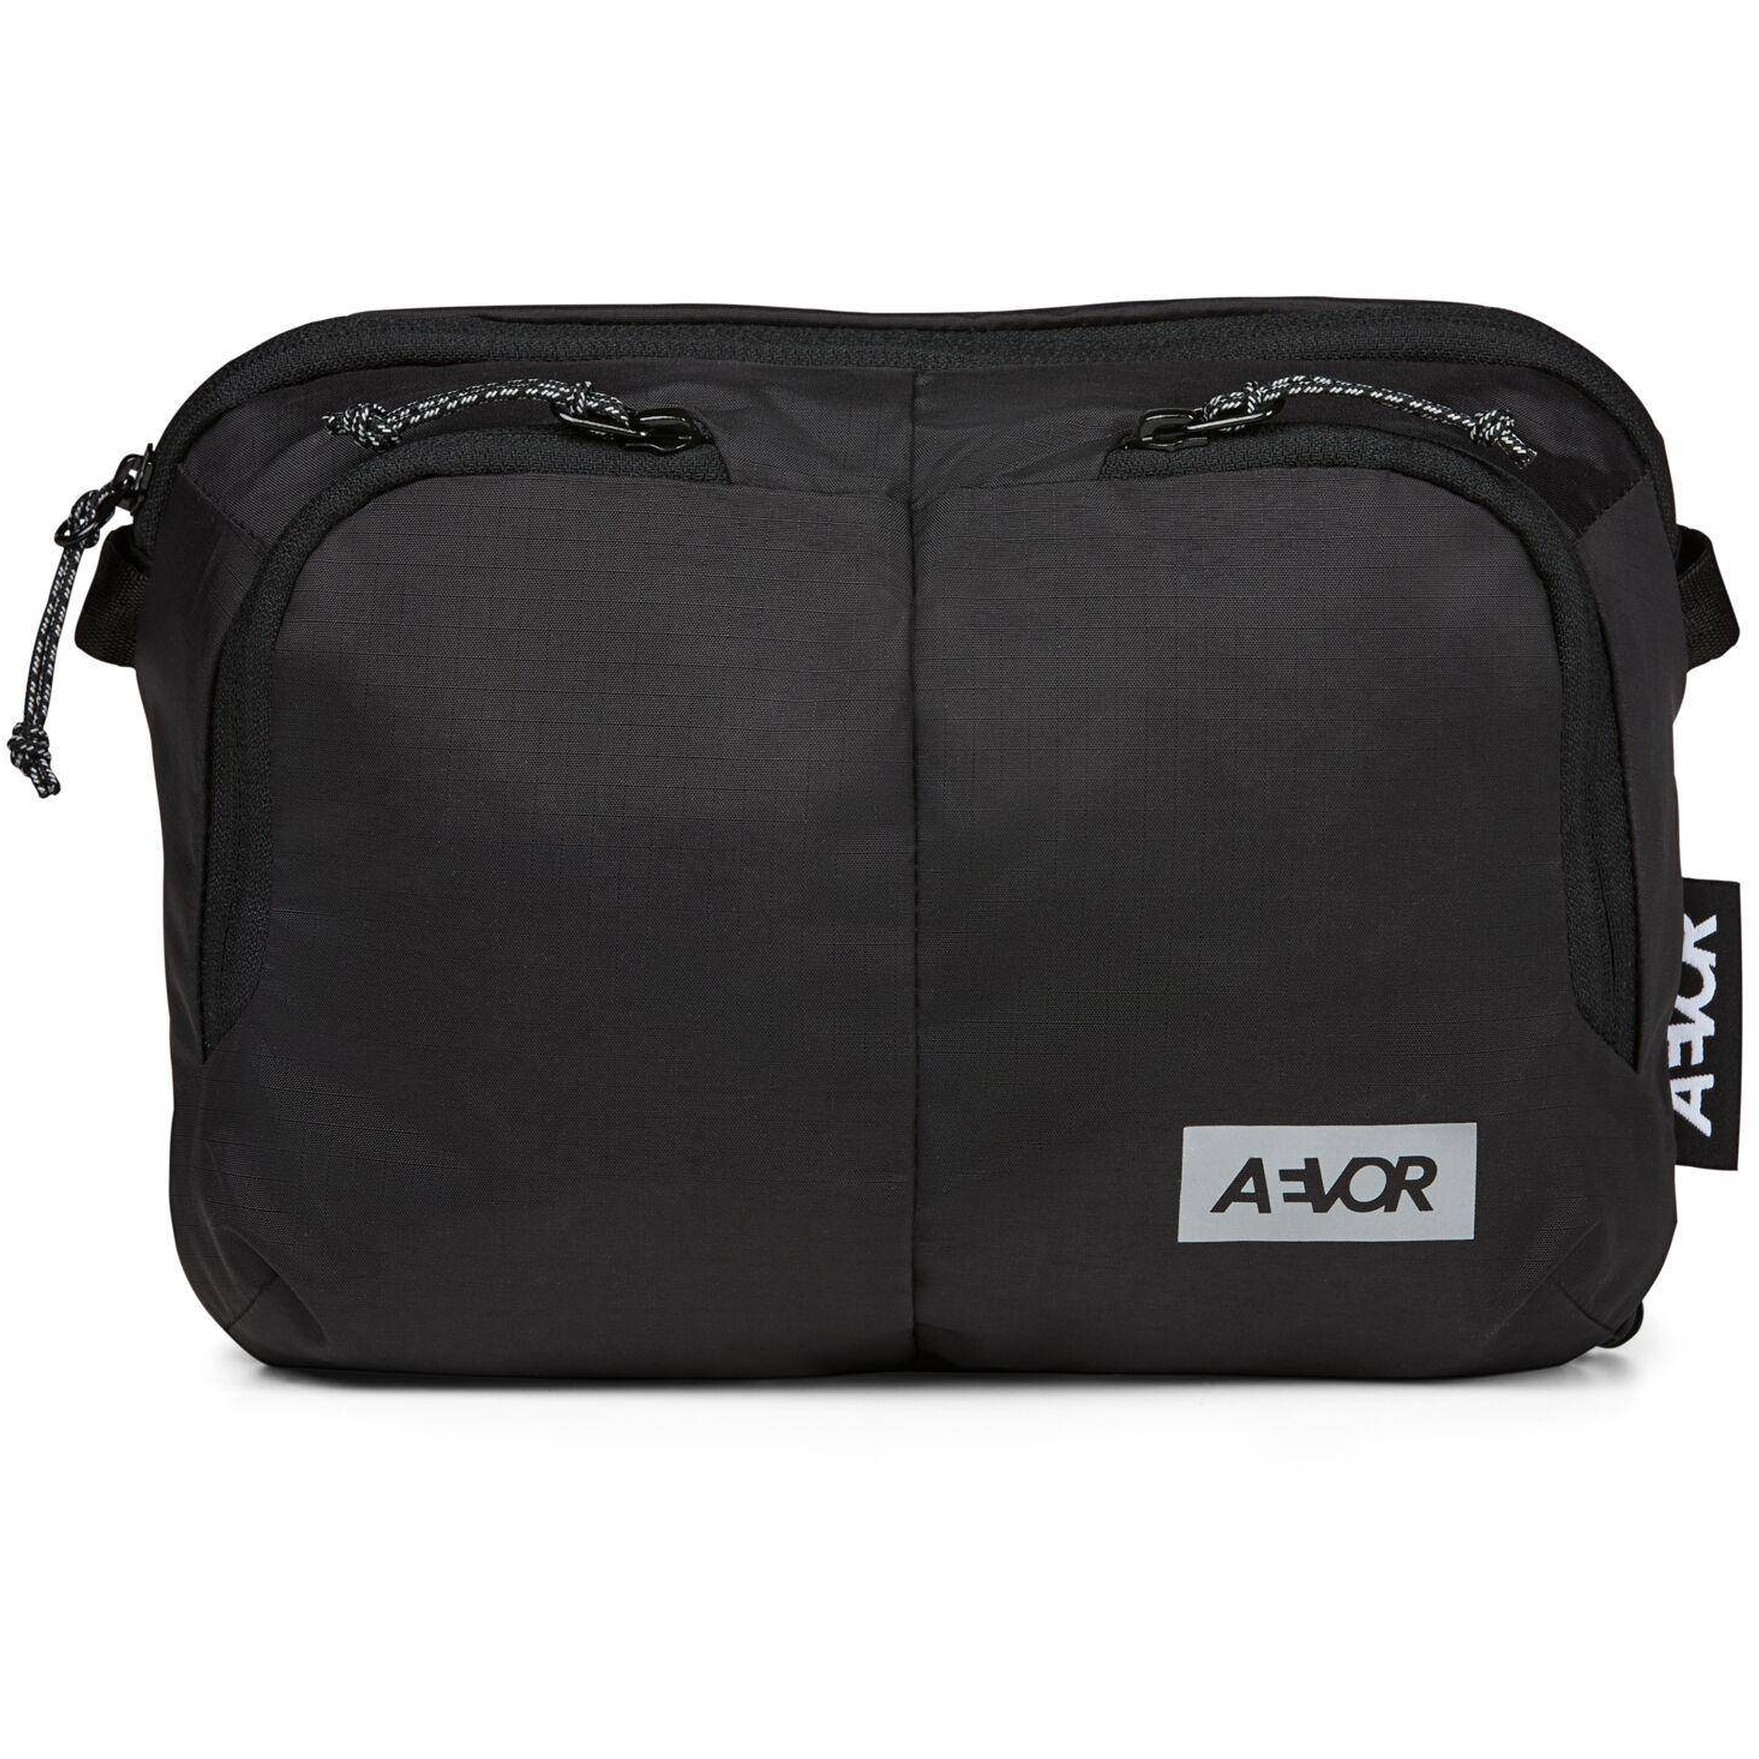 Productfoto van AEVOR Sacoche Bag 4L Schoudertas - Ripstop Black